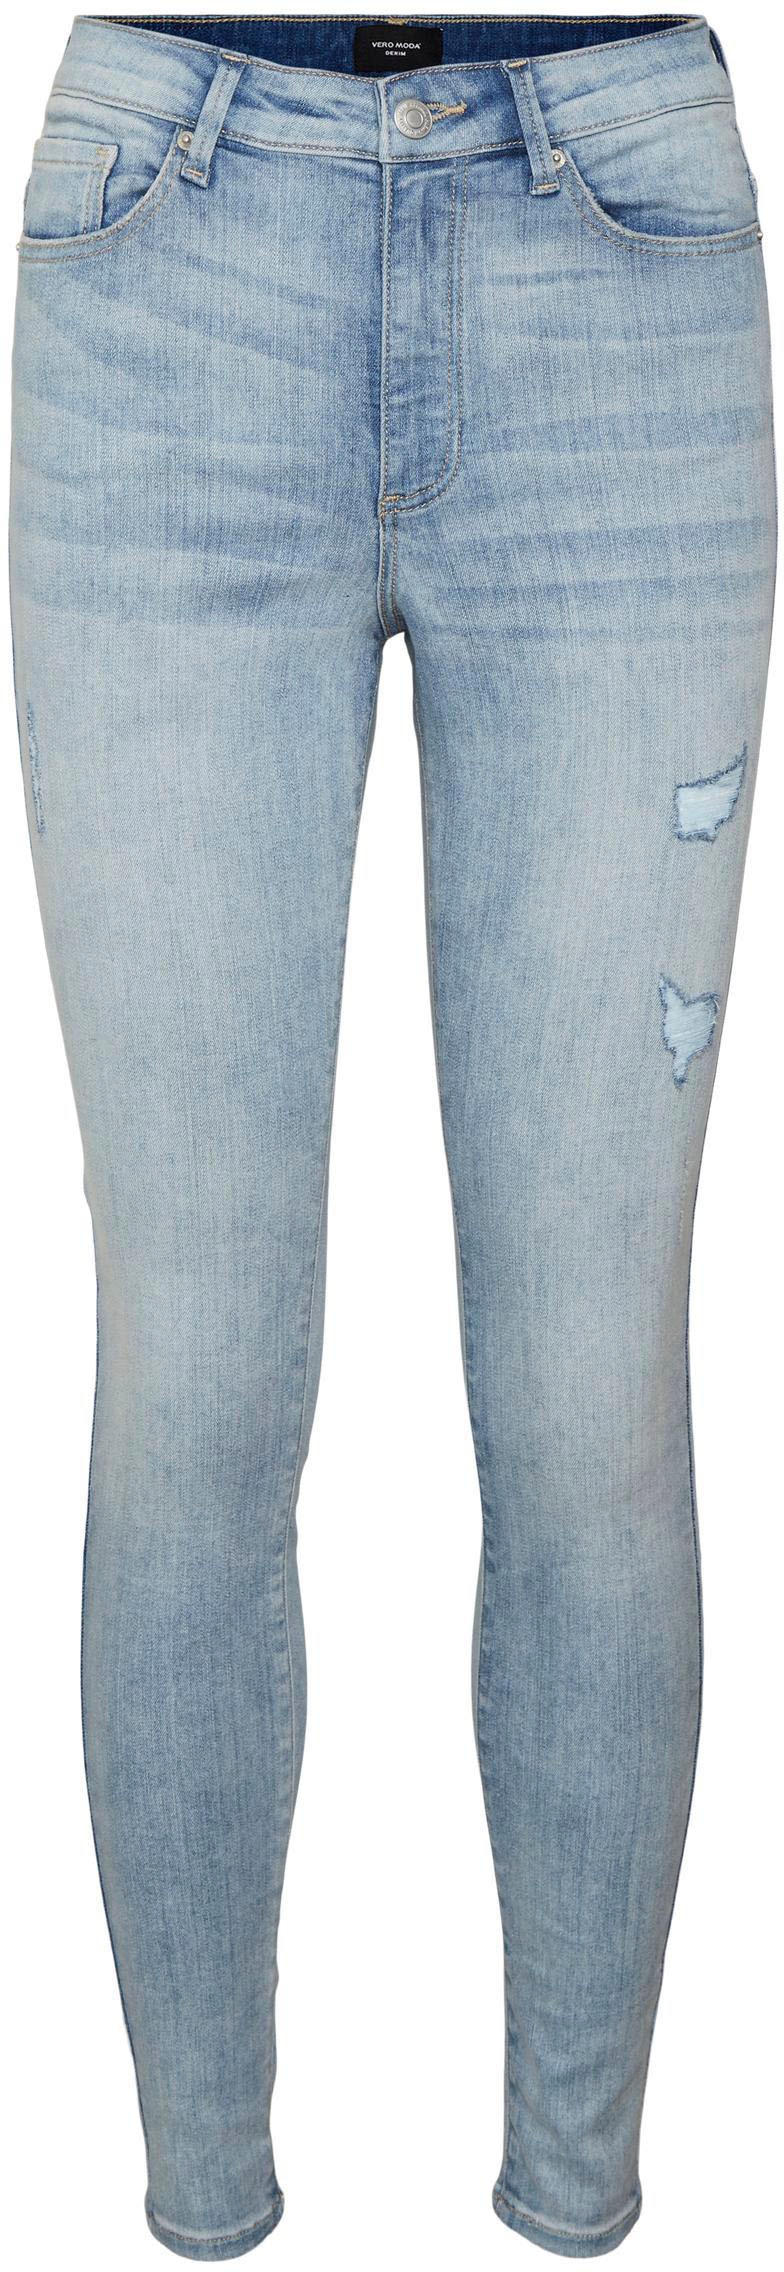 Vero Moda Skinny-fit-Jeans »VMSOPHIA HR SKINNY DESTR J AM314 NOOS«, mit Destroyed Effekt